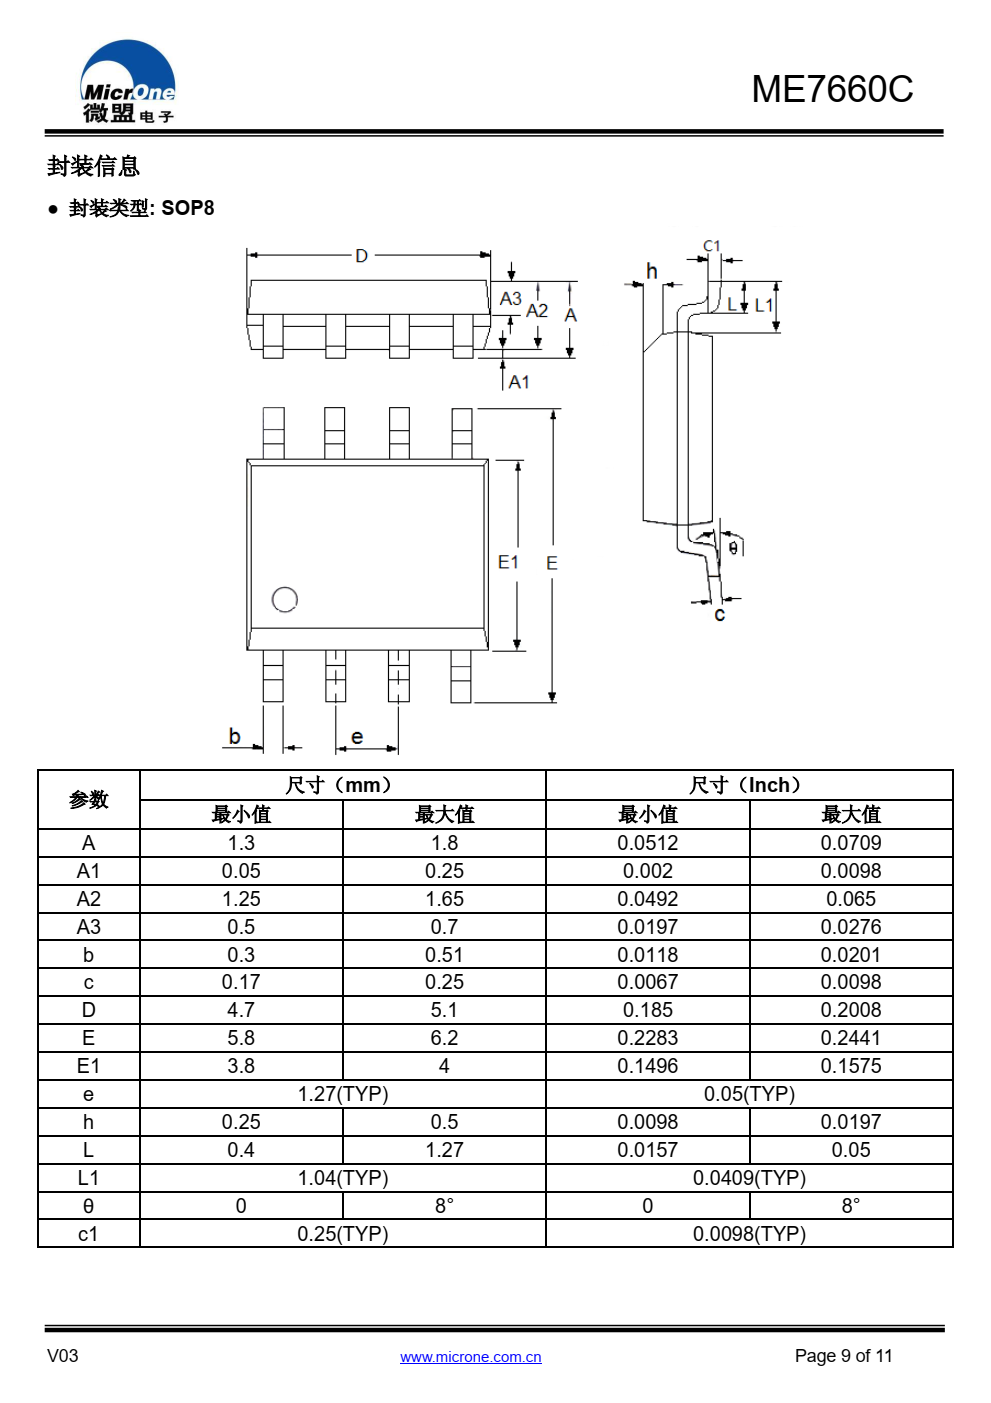 ME7660C 是一款 DC/DC 电荷泵电压反转 专用集成电路